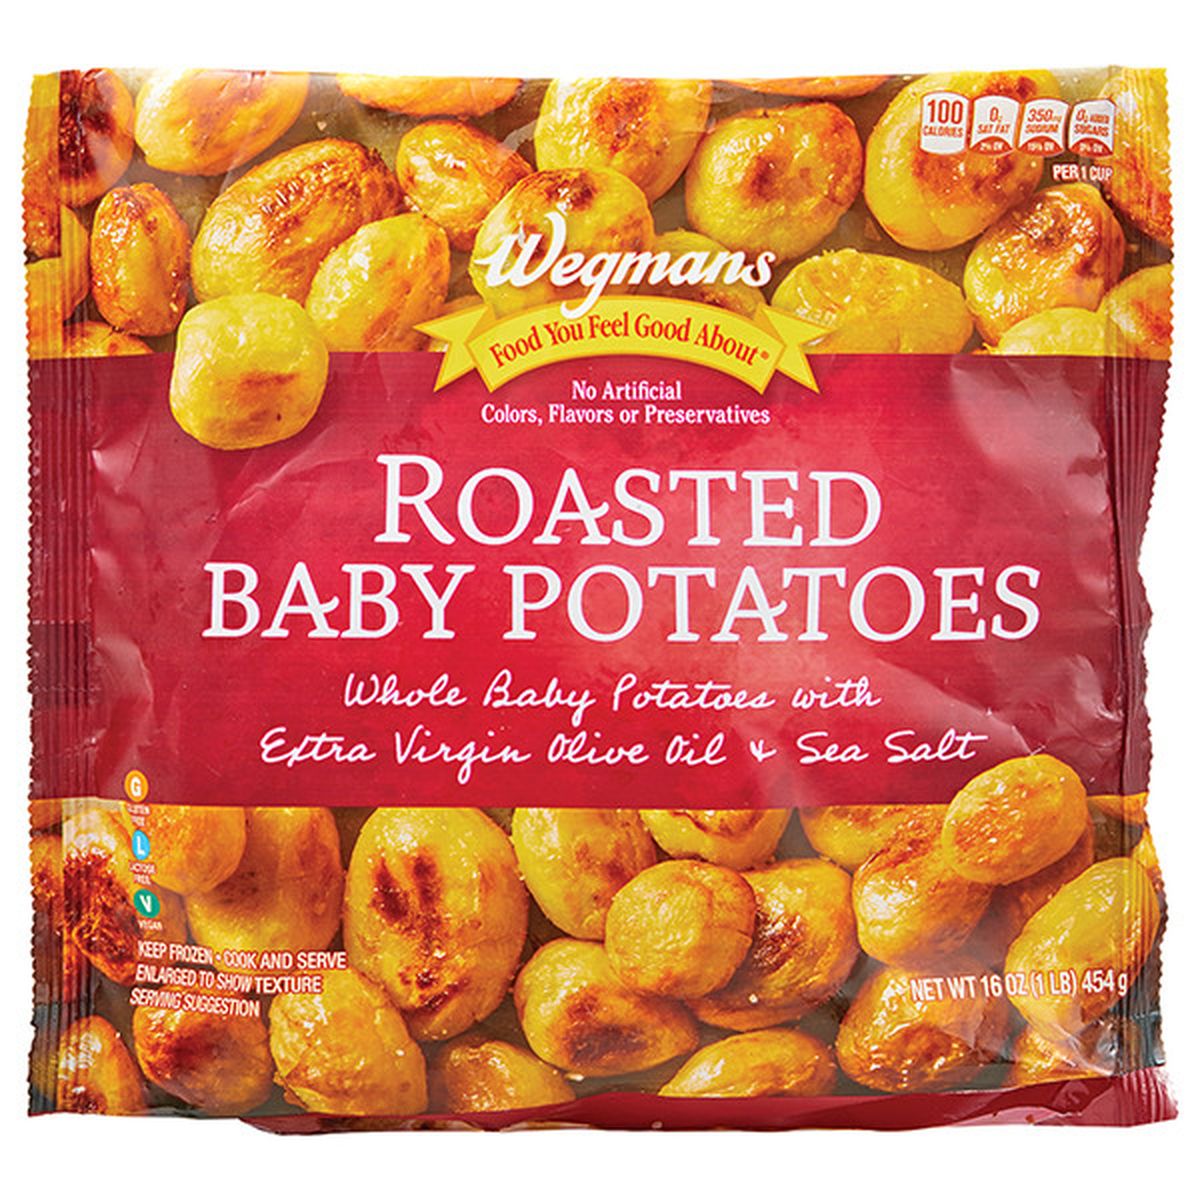 Calories in Wegmans Roasted Baby Potatoes